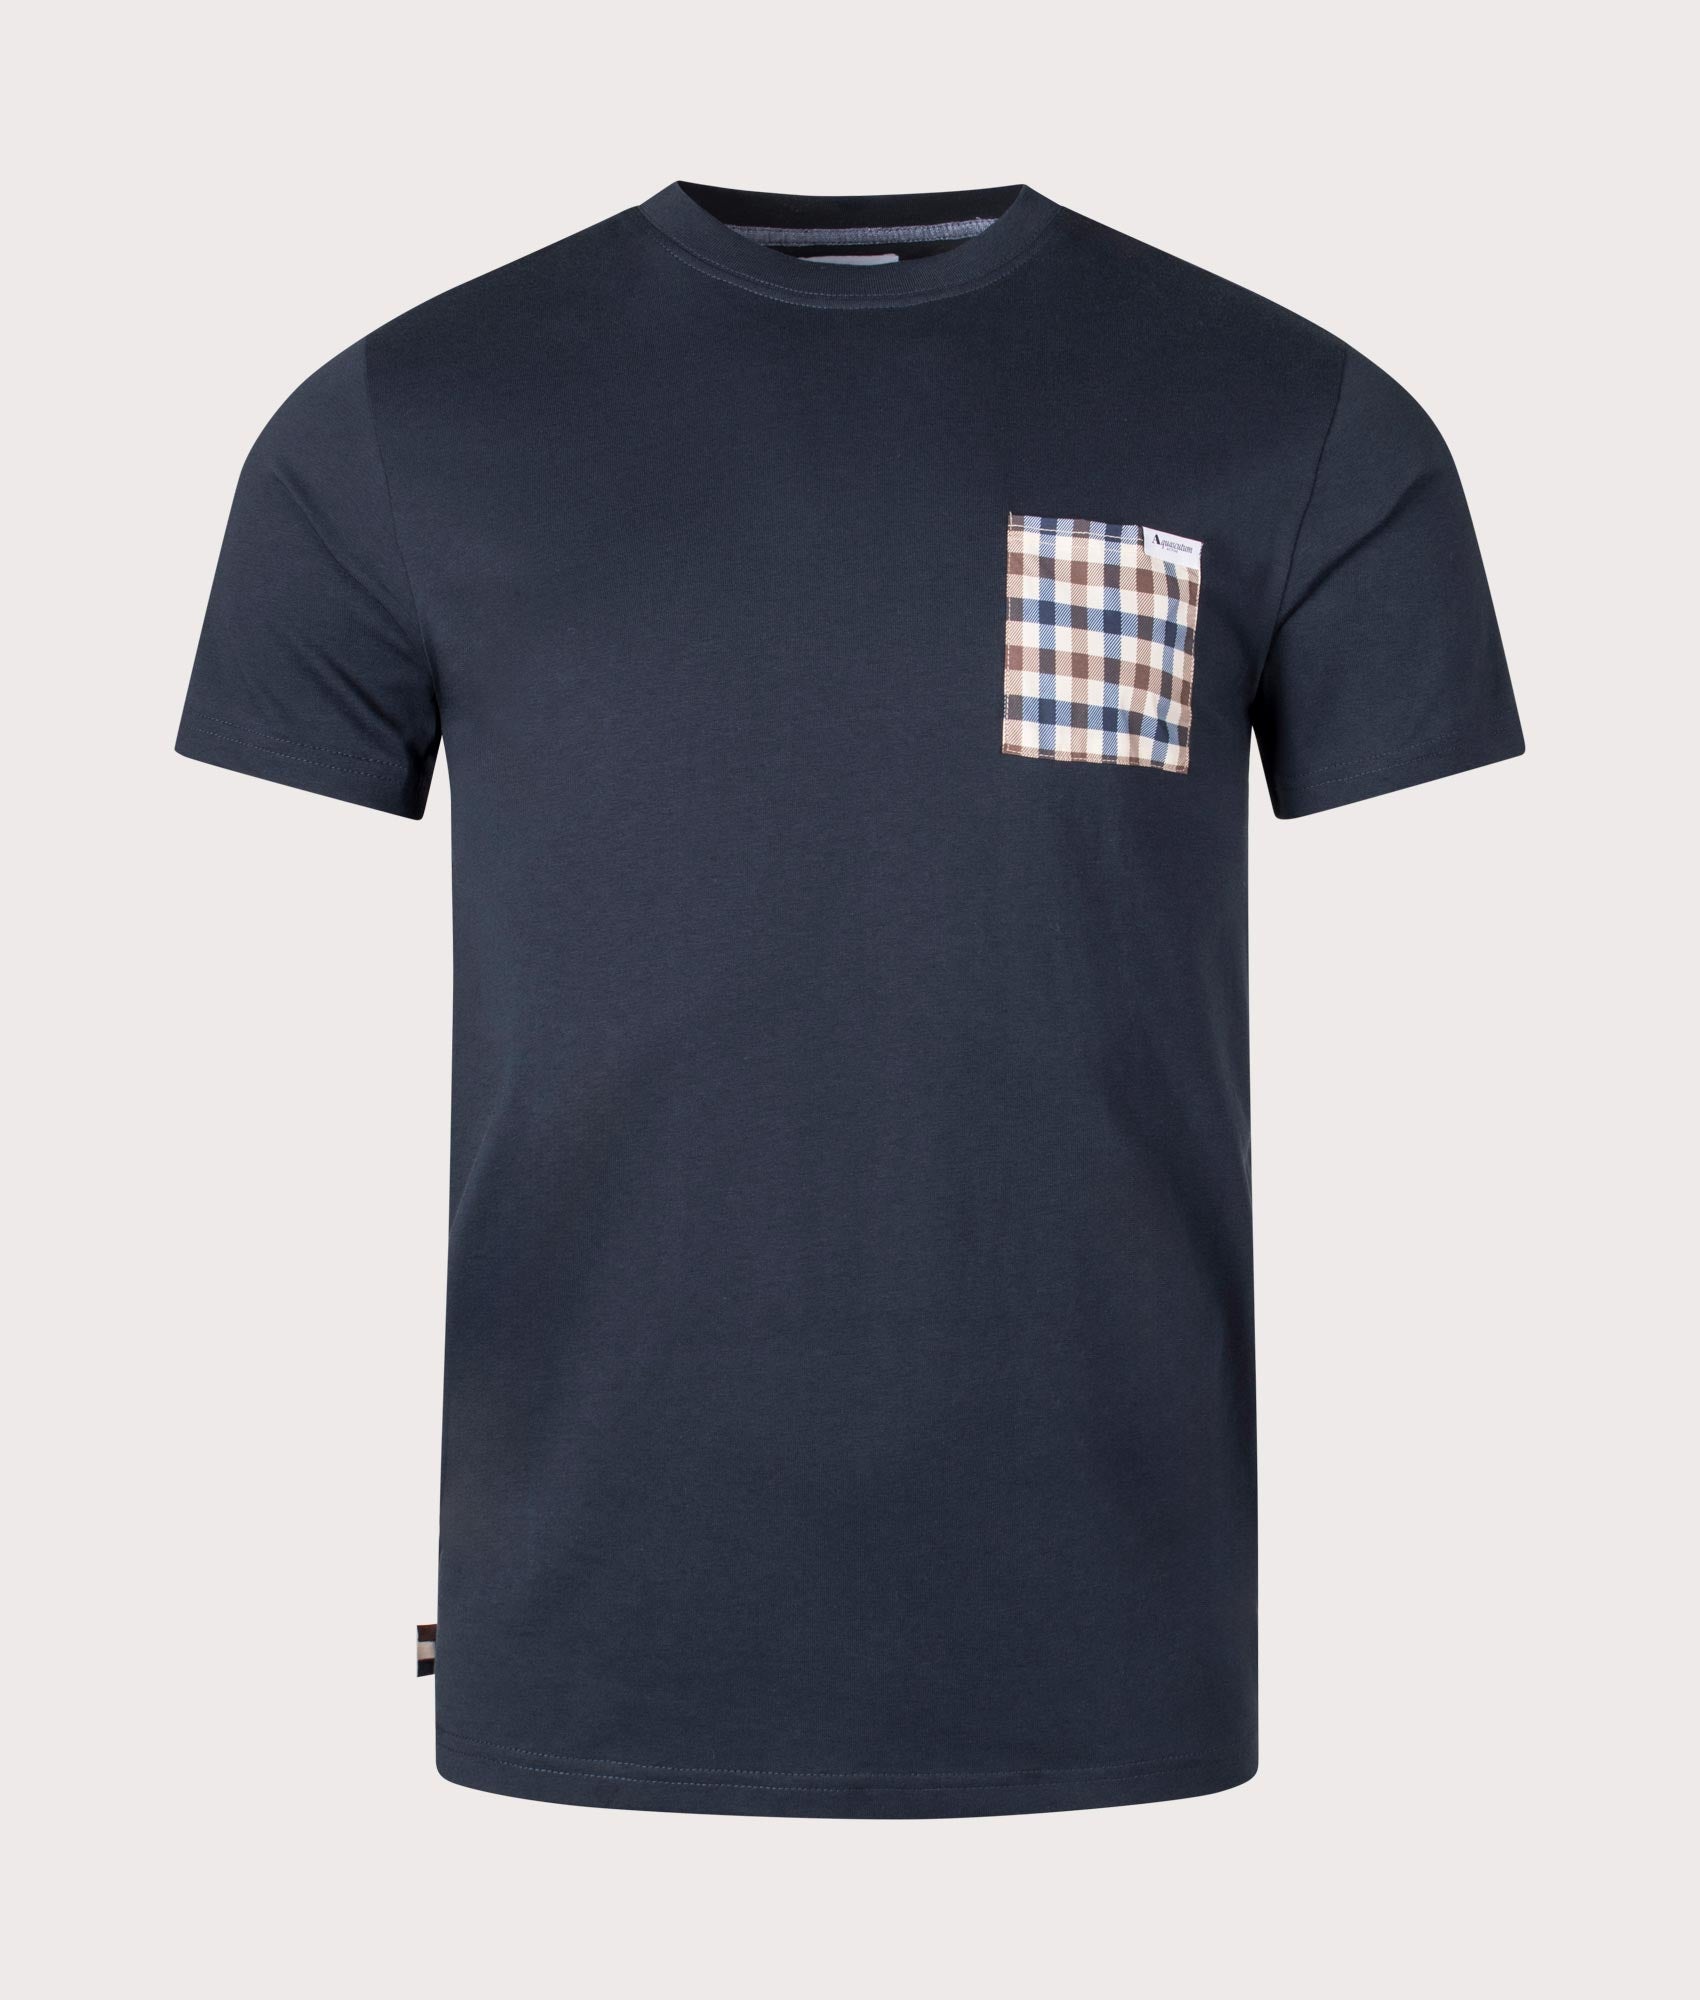 Aquascutum Mens Active Club Check Pocket T-Shirt - Colour: 11 Navy - Size: XL